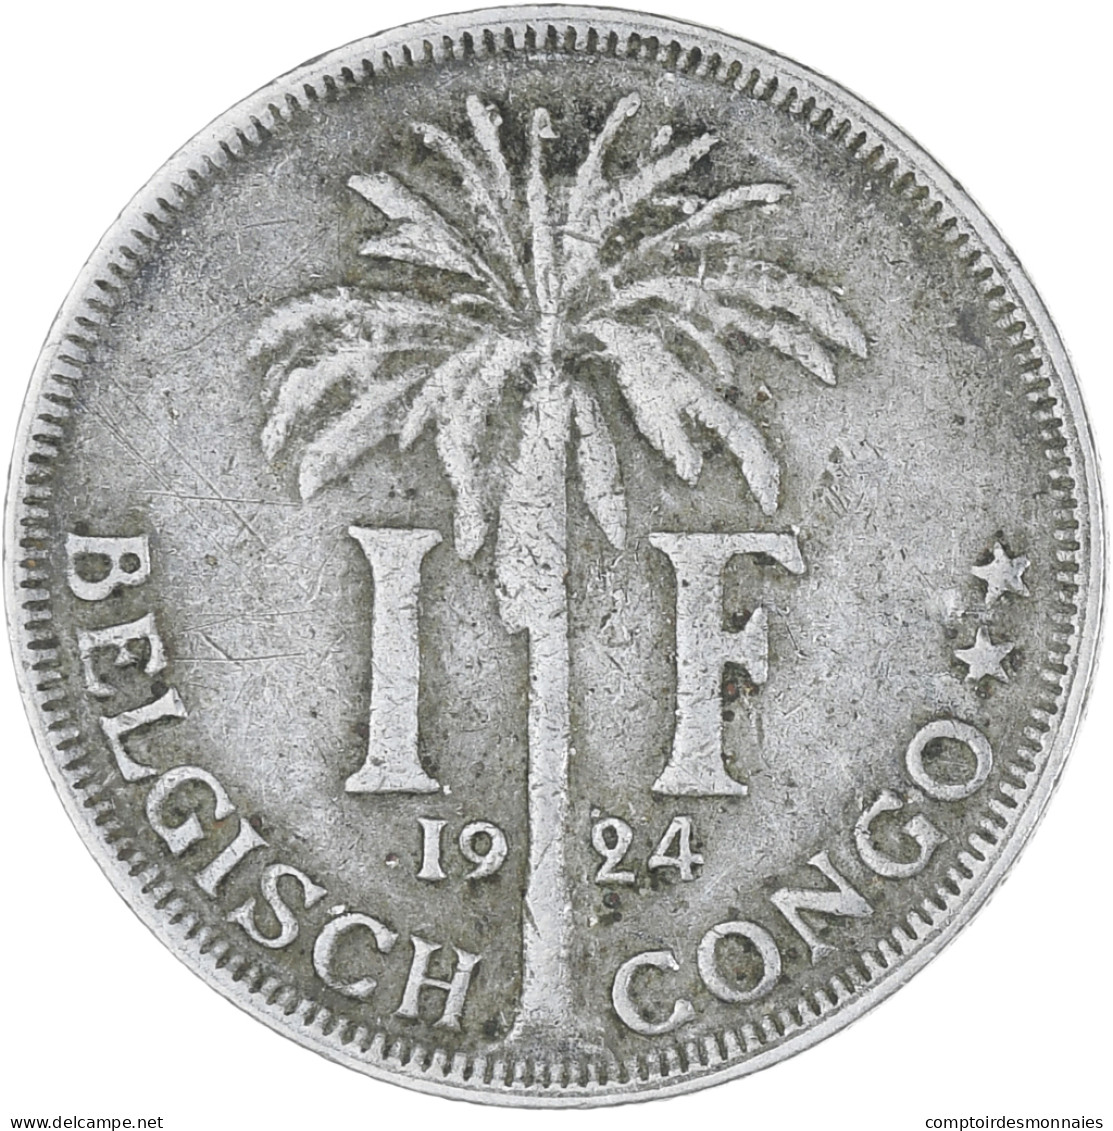 Monnaie, Congo Belge, Franc, 1924, TTB, Cupro-nickel, KM:21 - 1910-1934: Albert I.